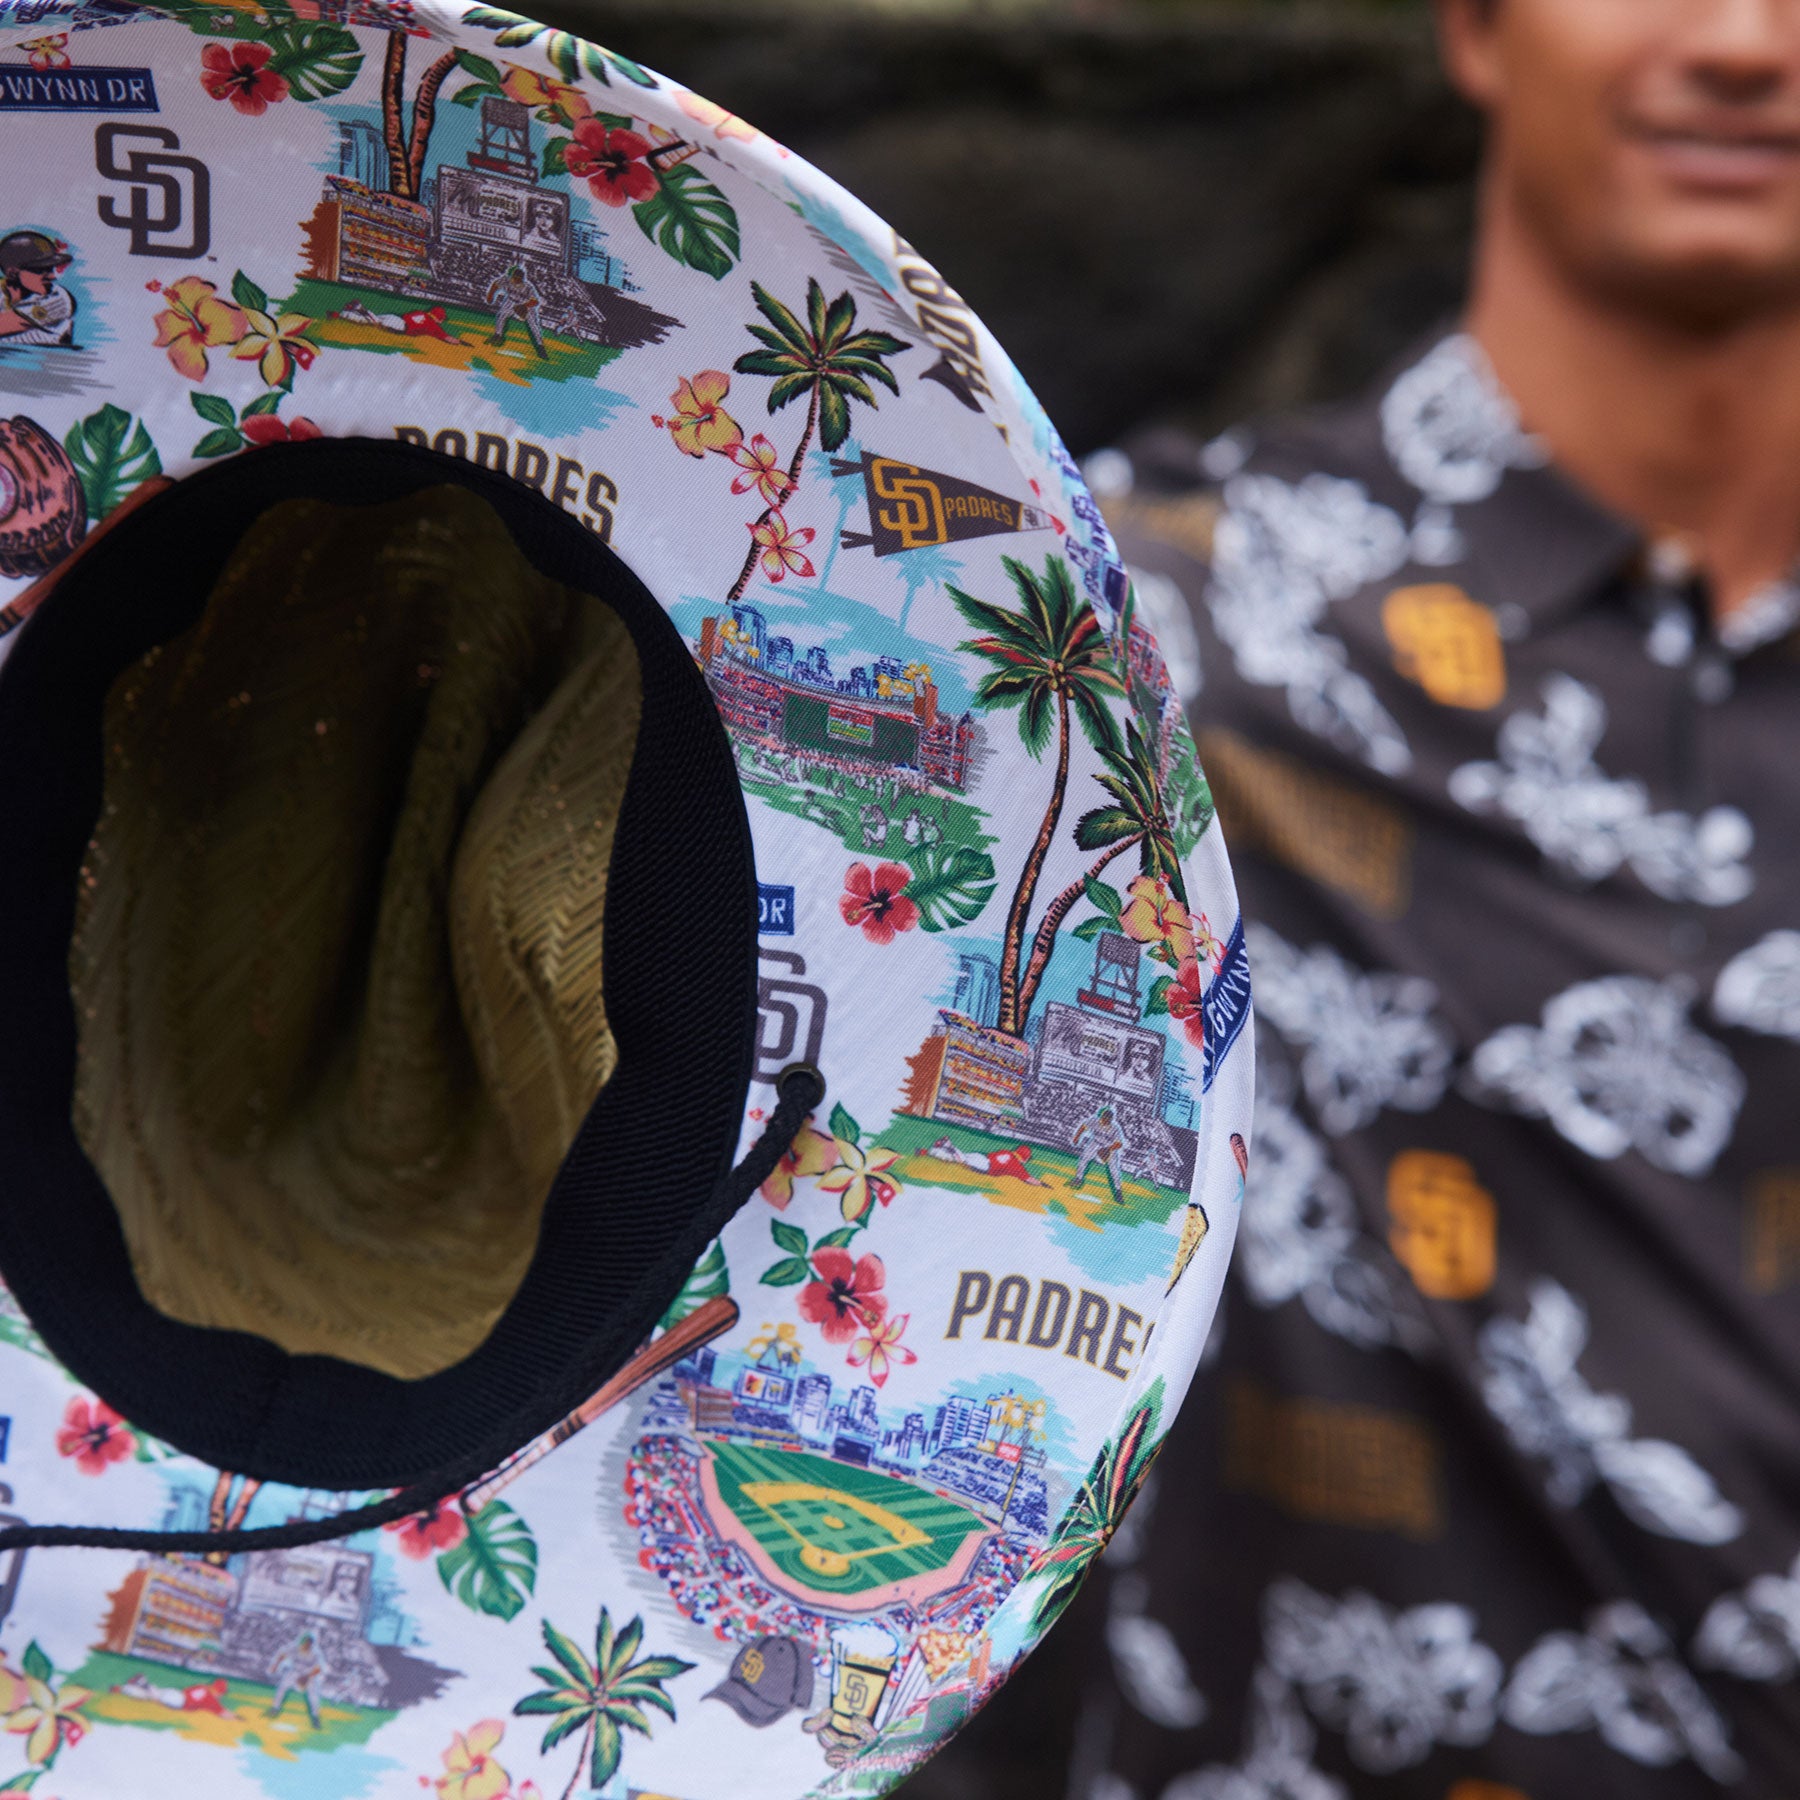 Reyn Spooner San Diego Padres scenic Straw Hat - One Size Each